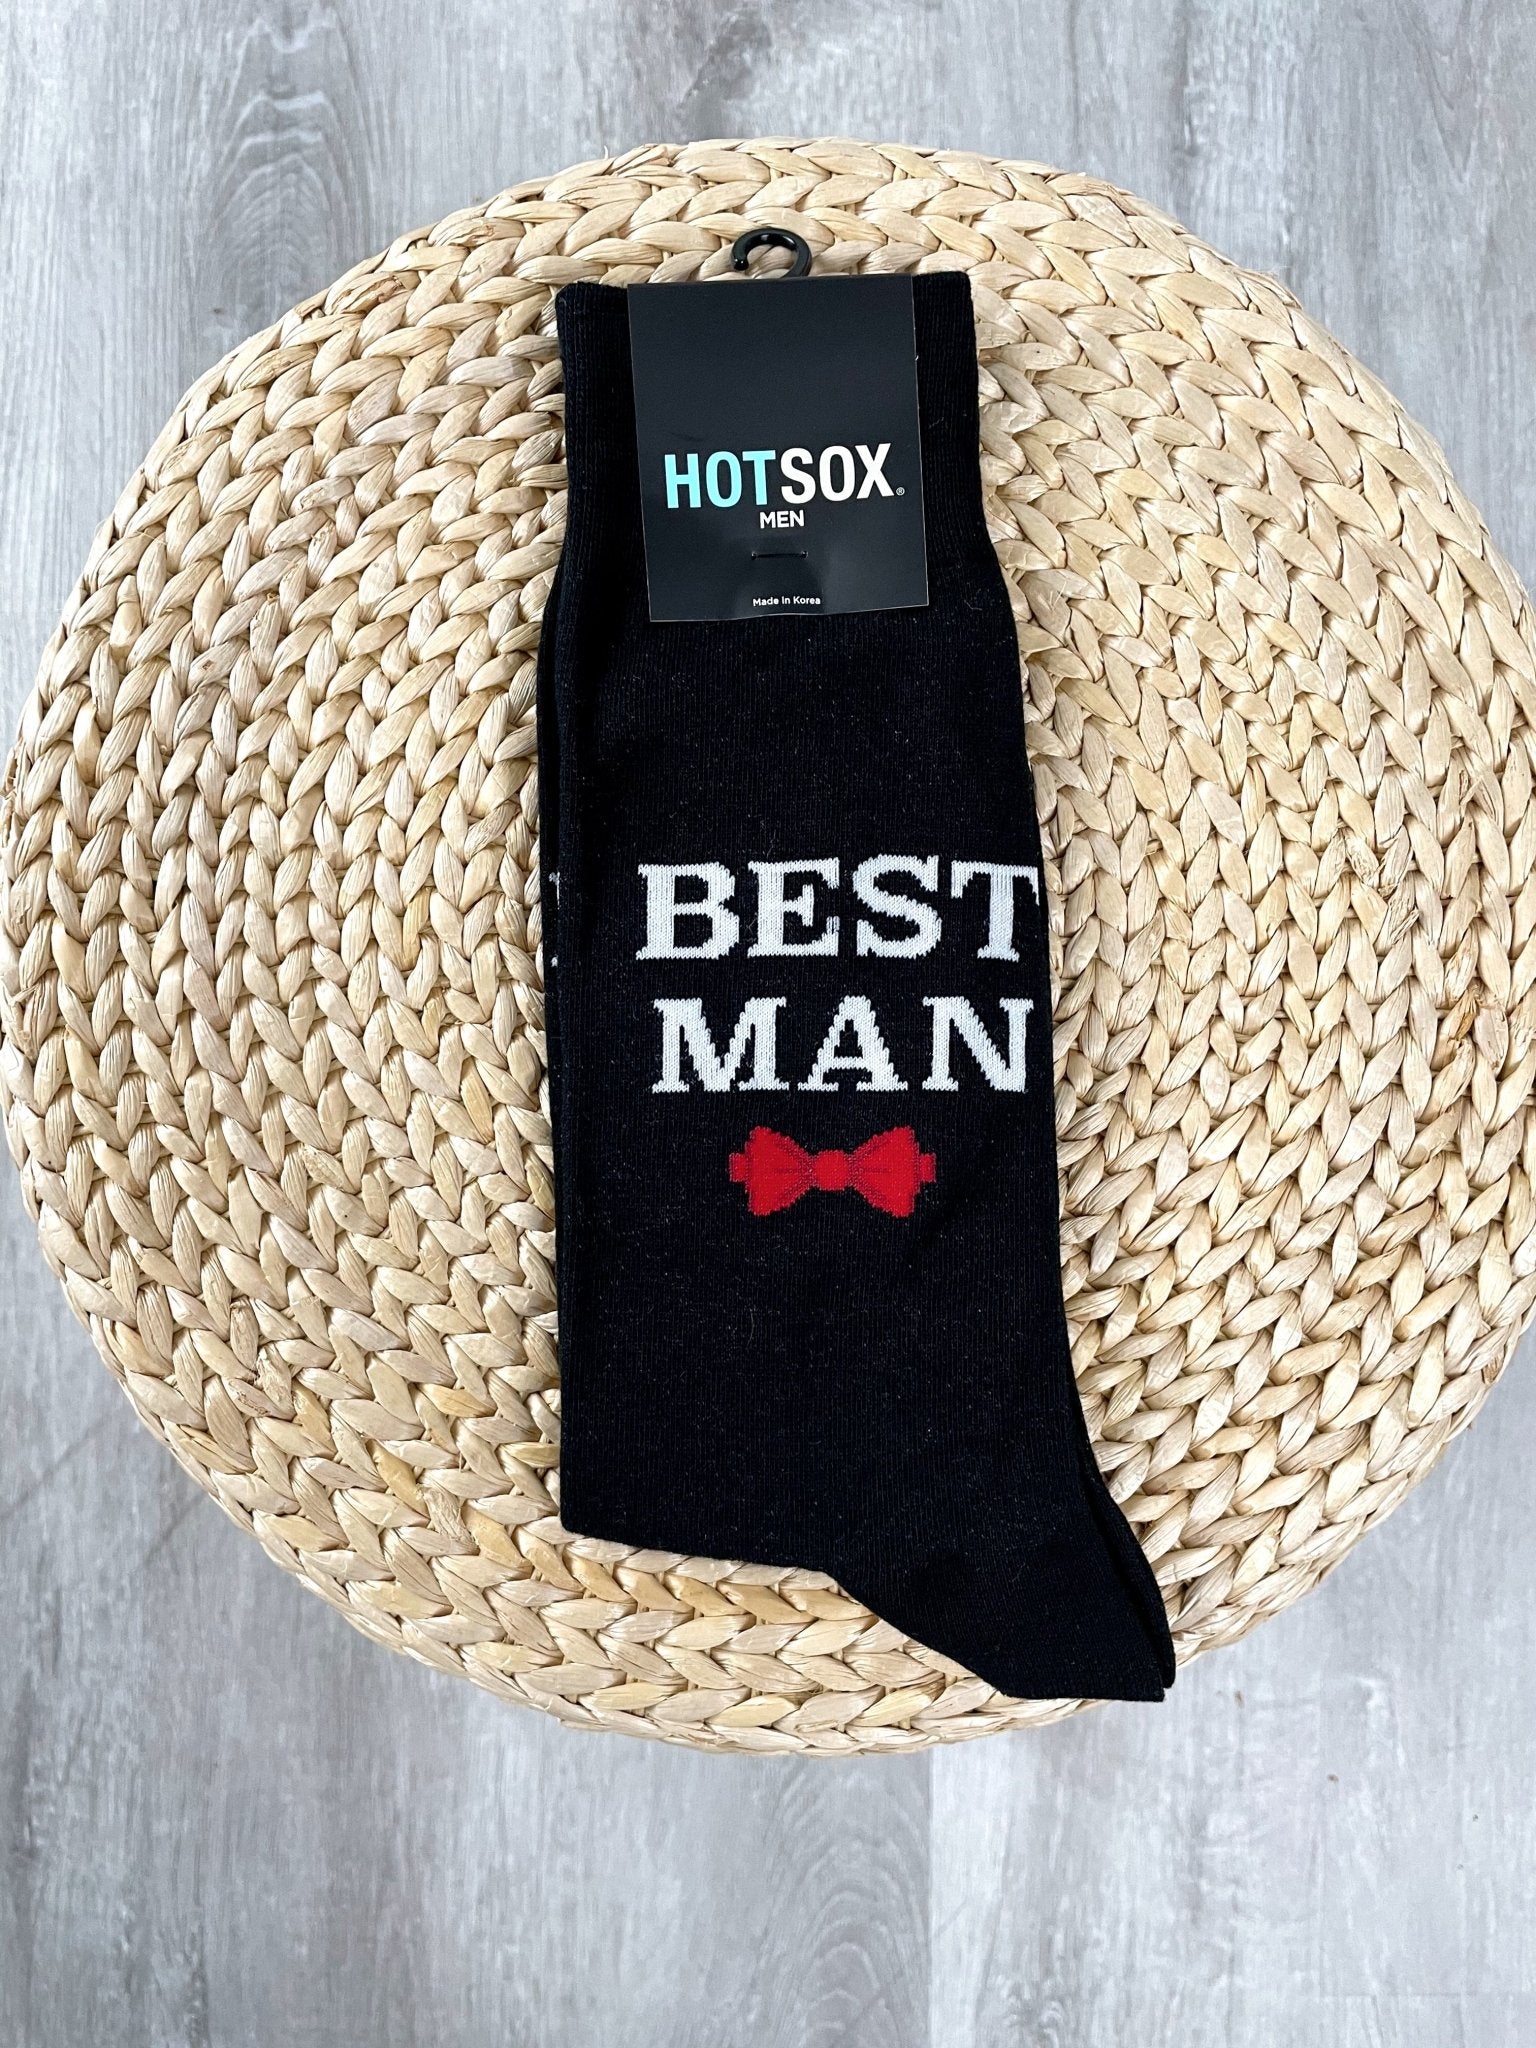 HotSox men's best man socks - Trendy Socks at Lush Fashion Lounge Boutique in Oklahoma City